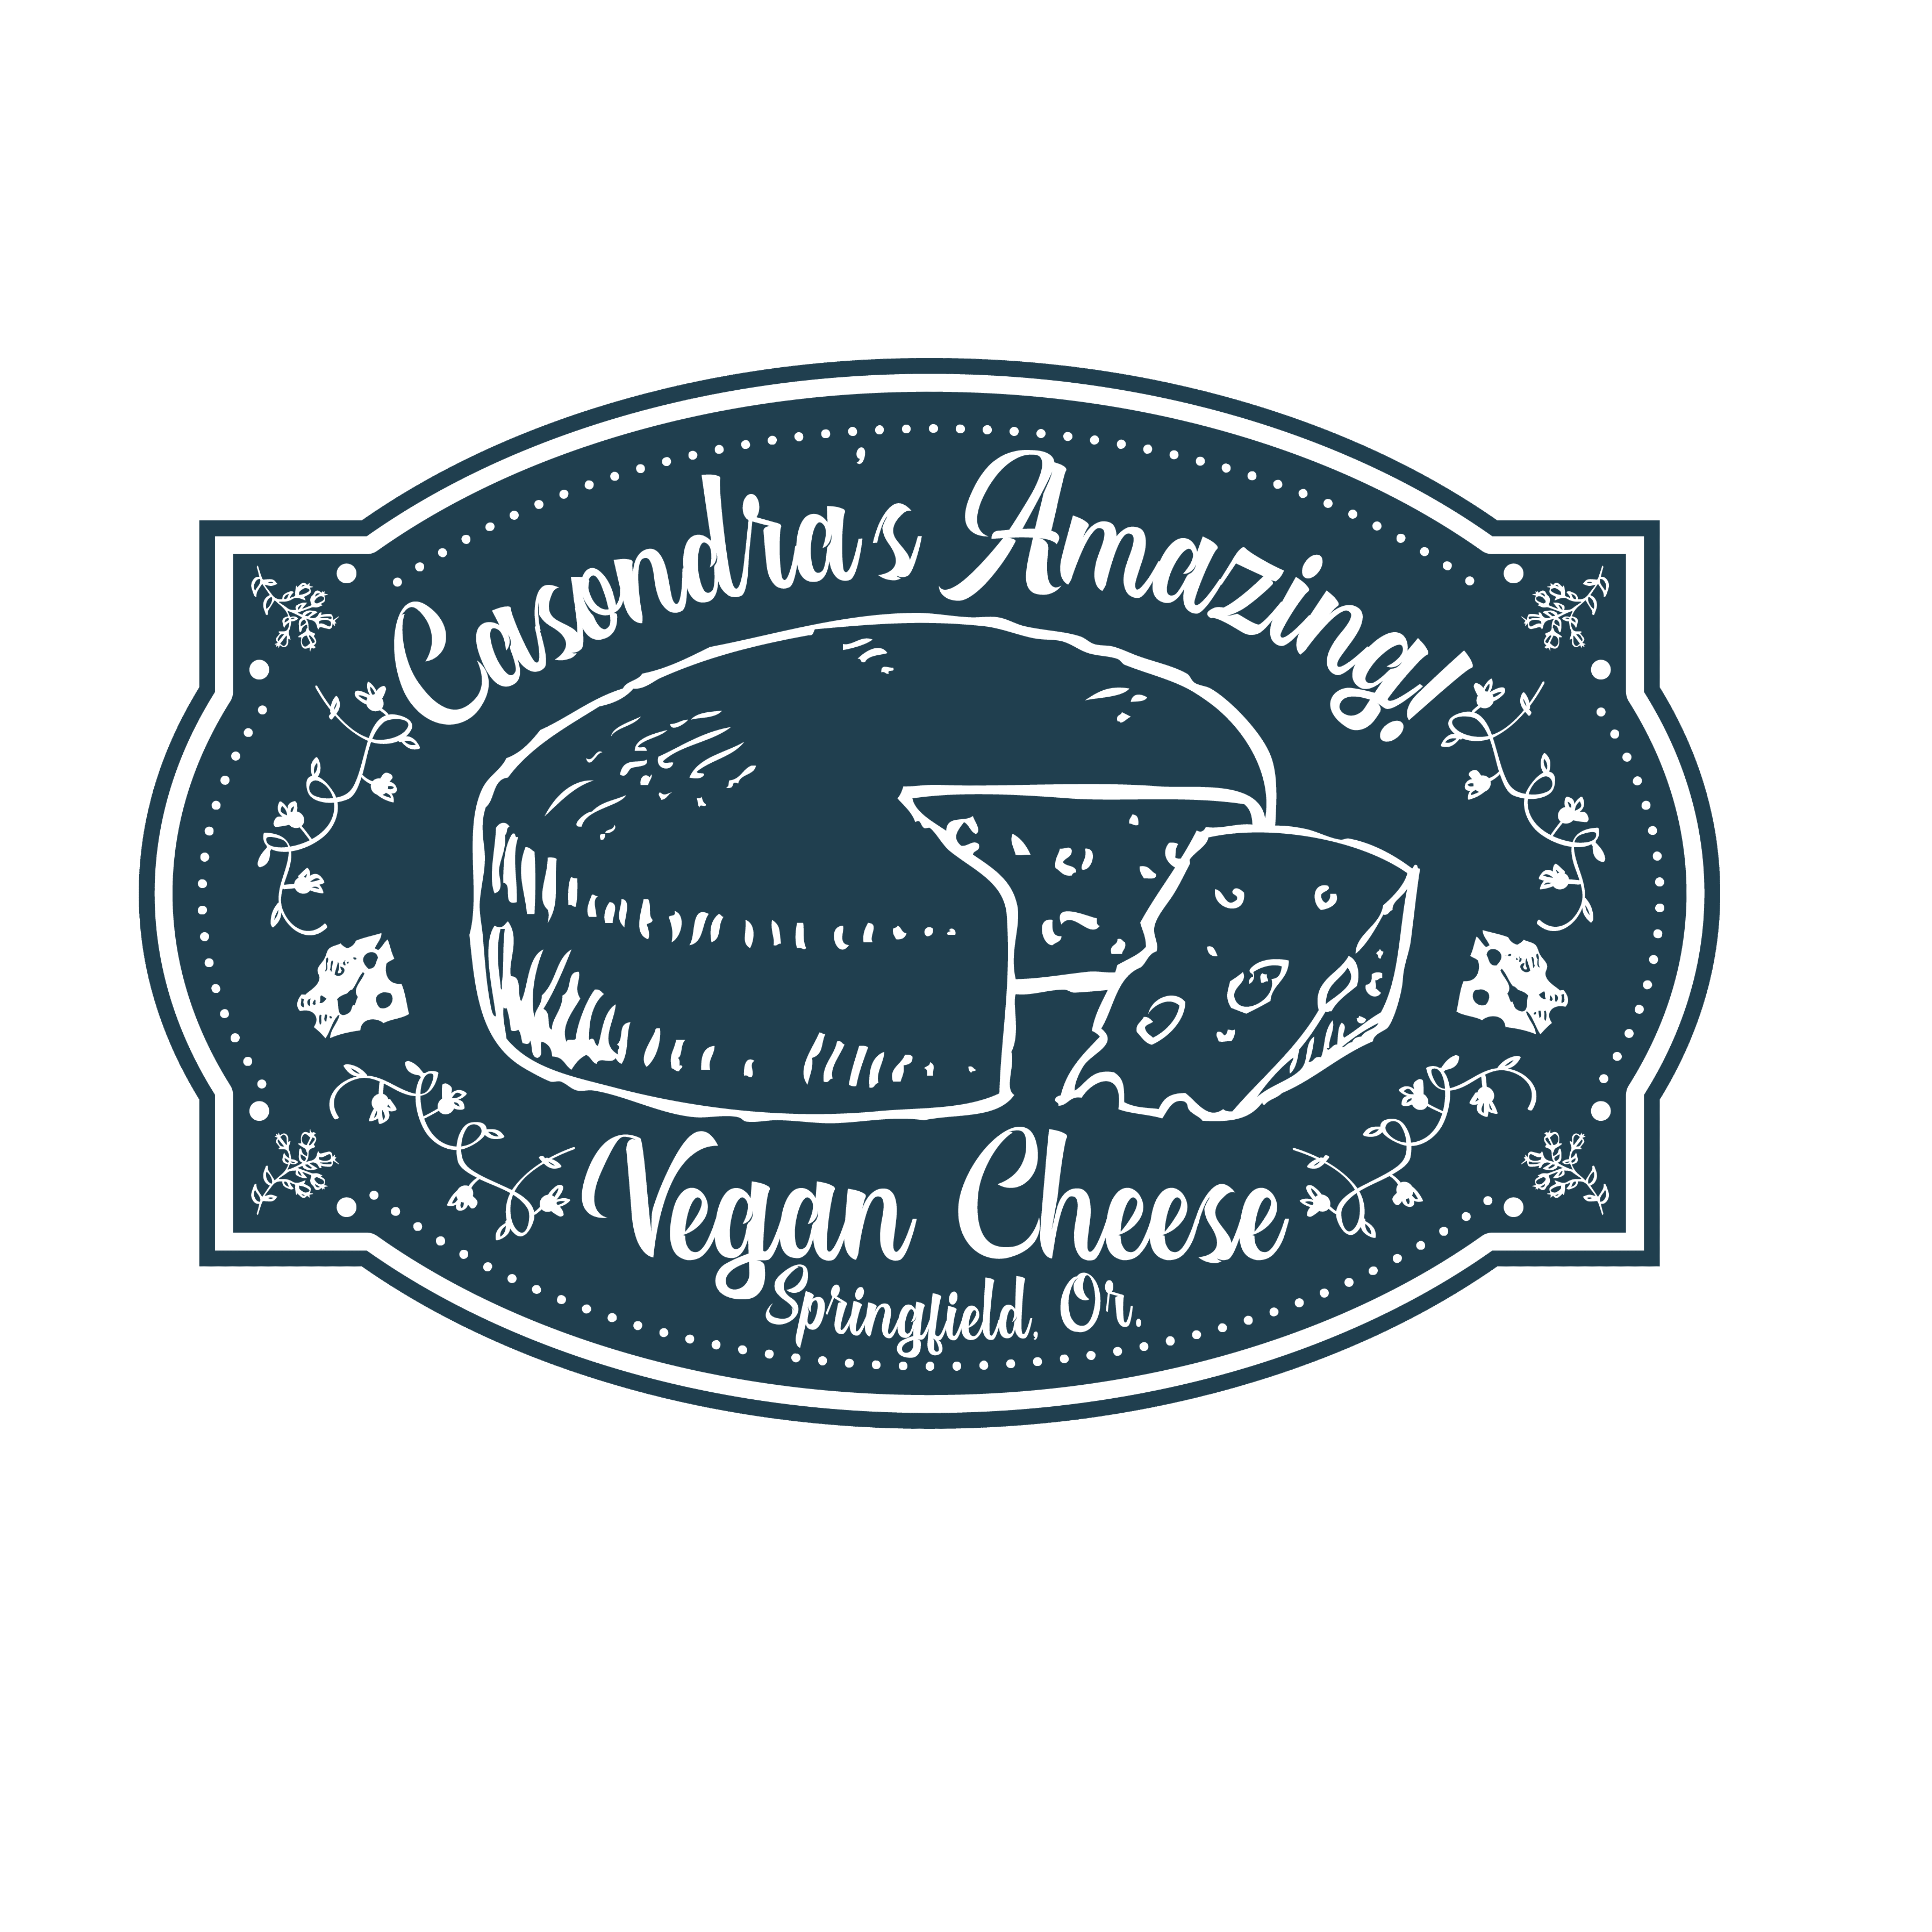 Casondra's Amazing! Vegan Cheese Co